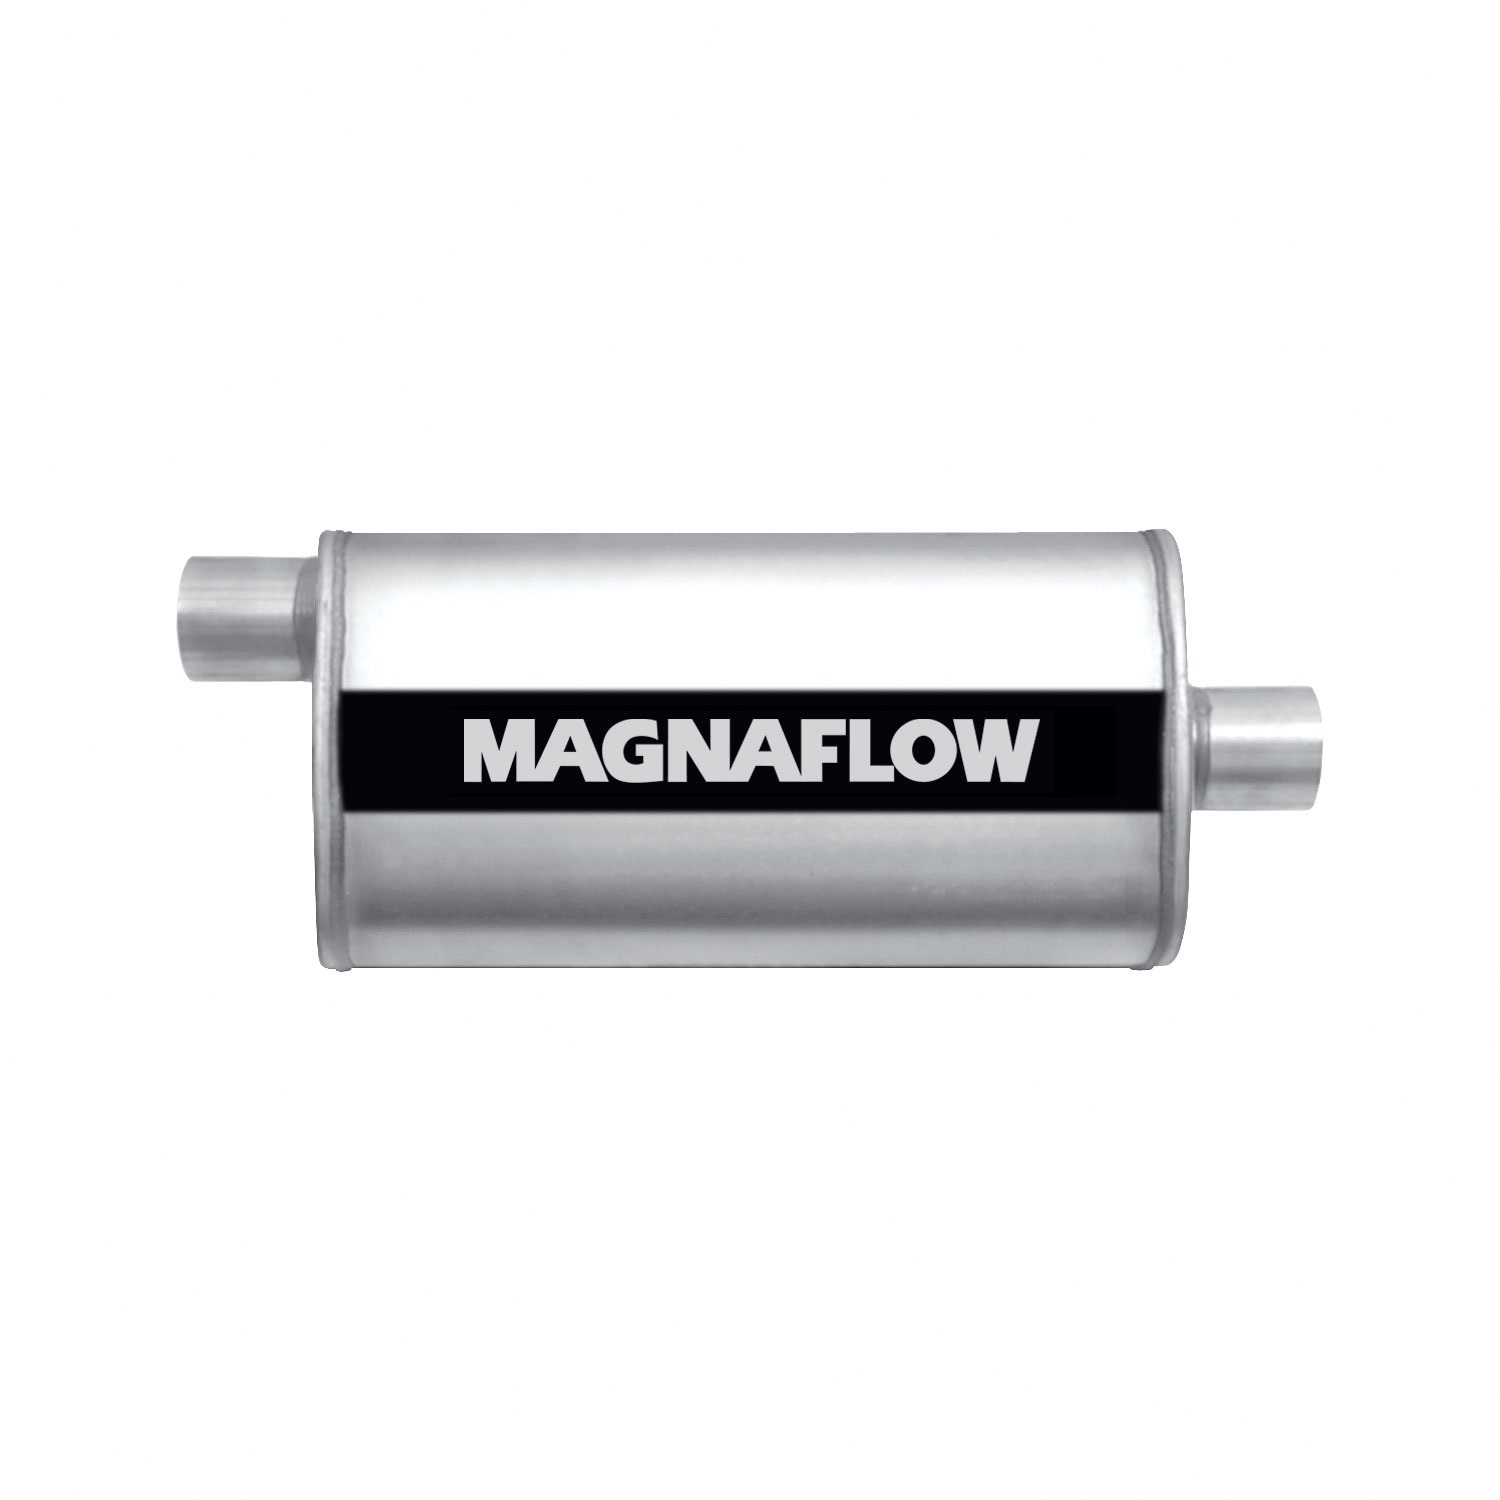 Magnaflow Performance Exhaust Magnaflow Performance Exhaust 11255 Stainless Steel Muffler